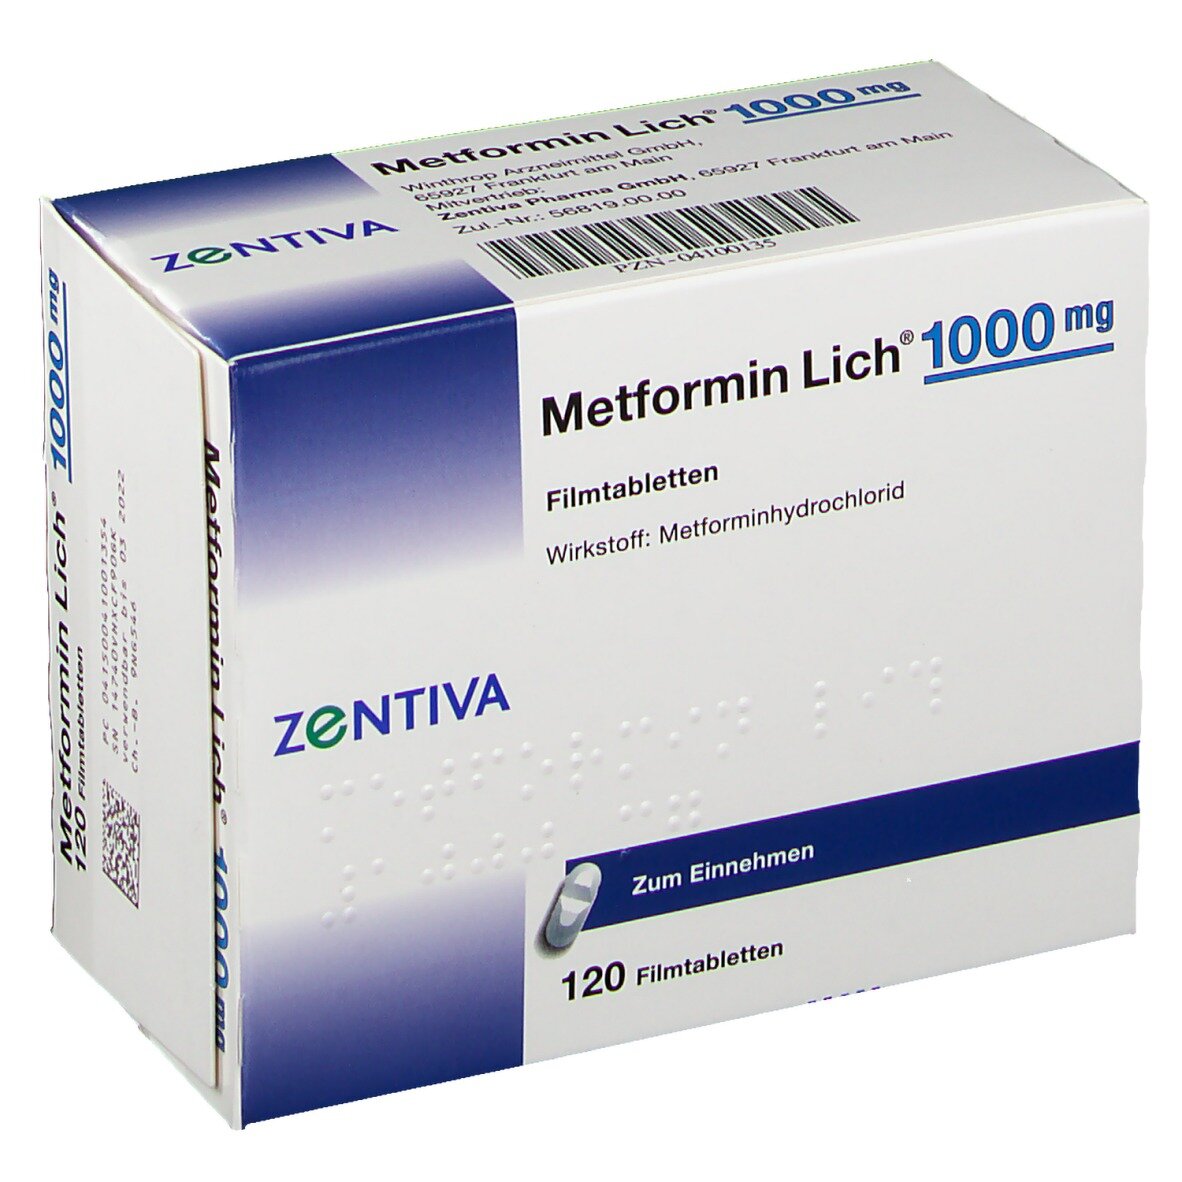 Метформин после 60 лет. Метформин 500. Метформин 500 мг синяя упаковка. Метформин 1000. Метформин 1000 мг.